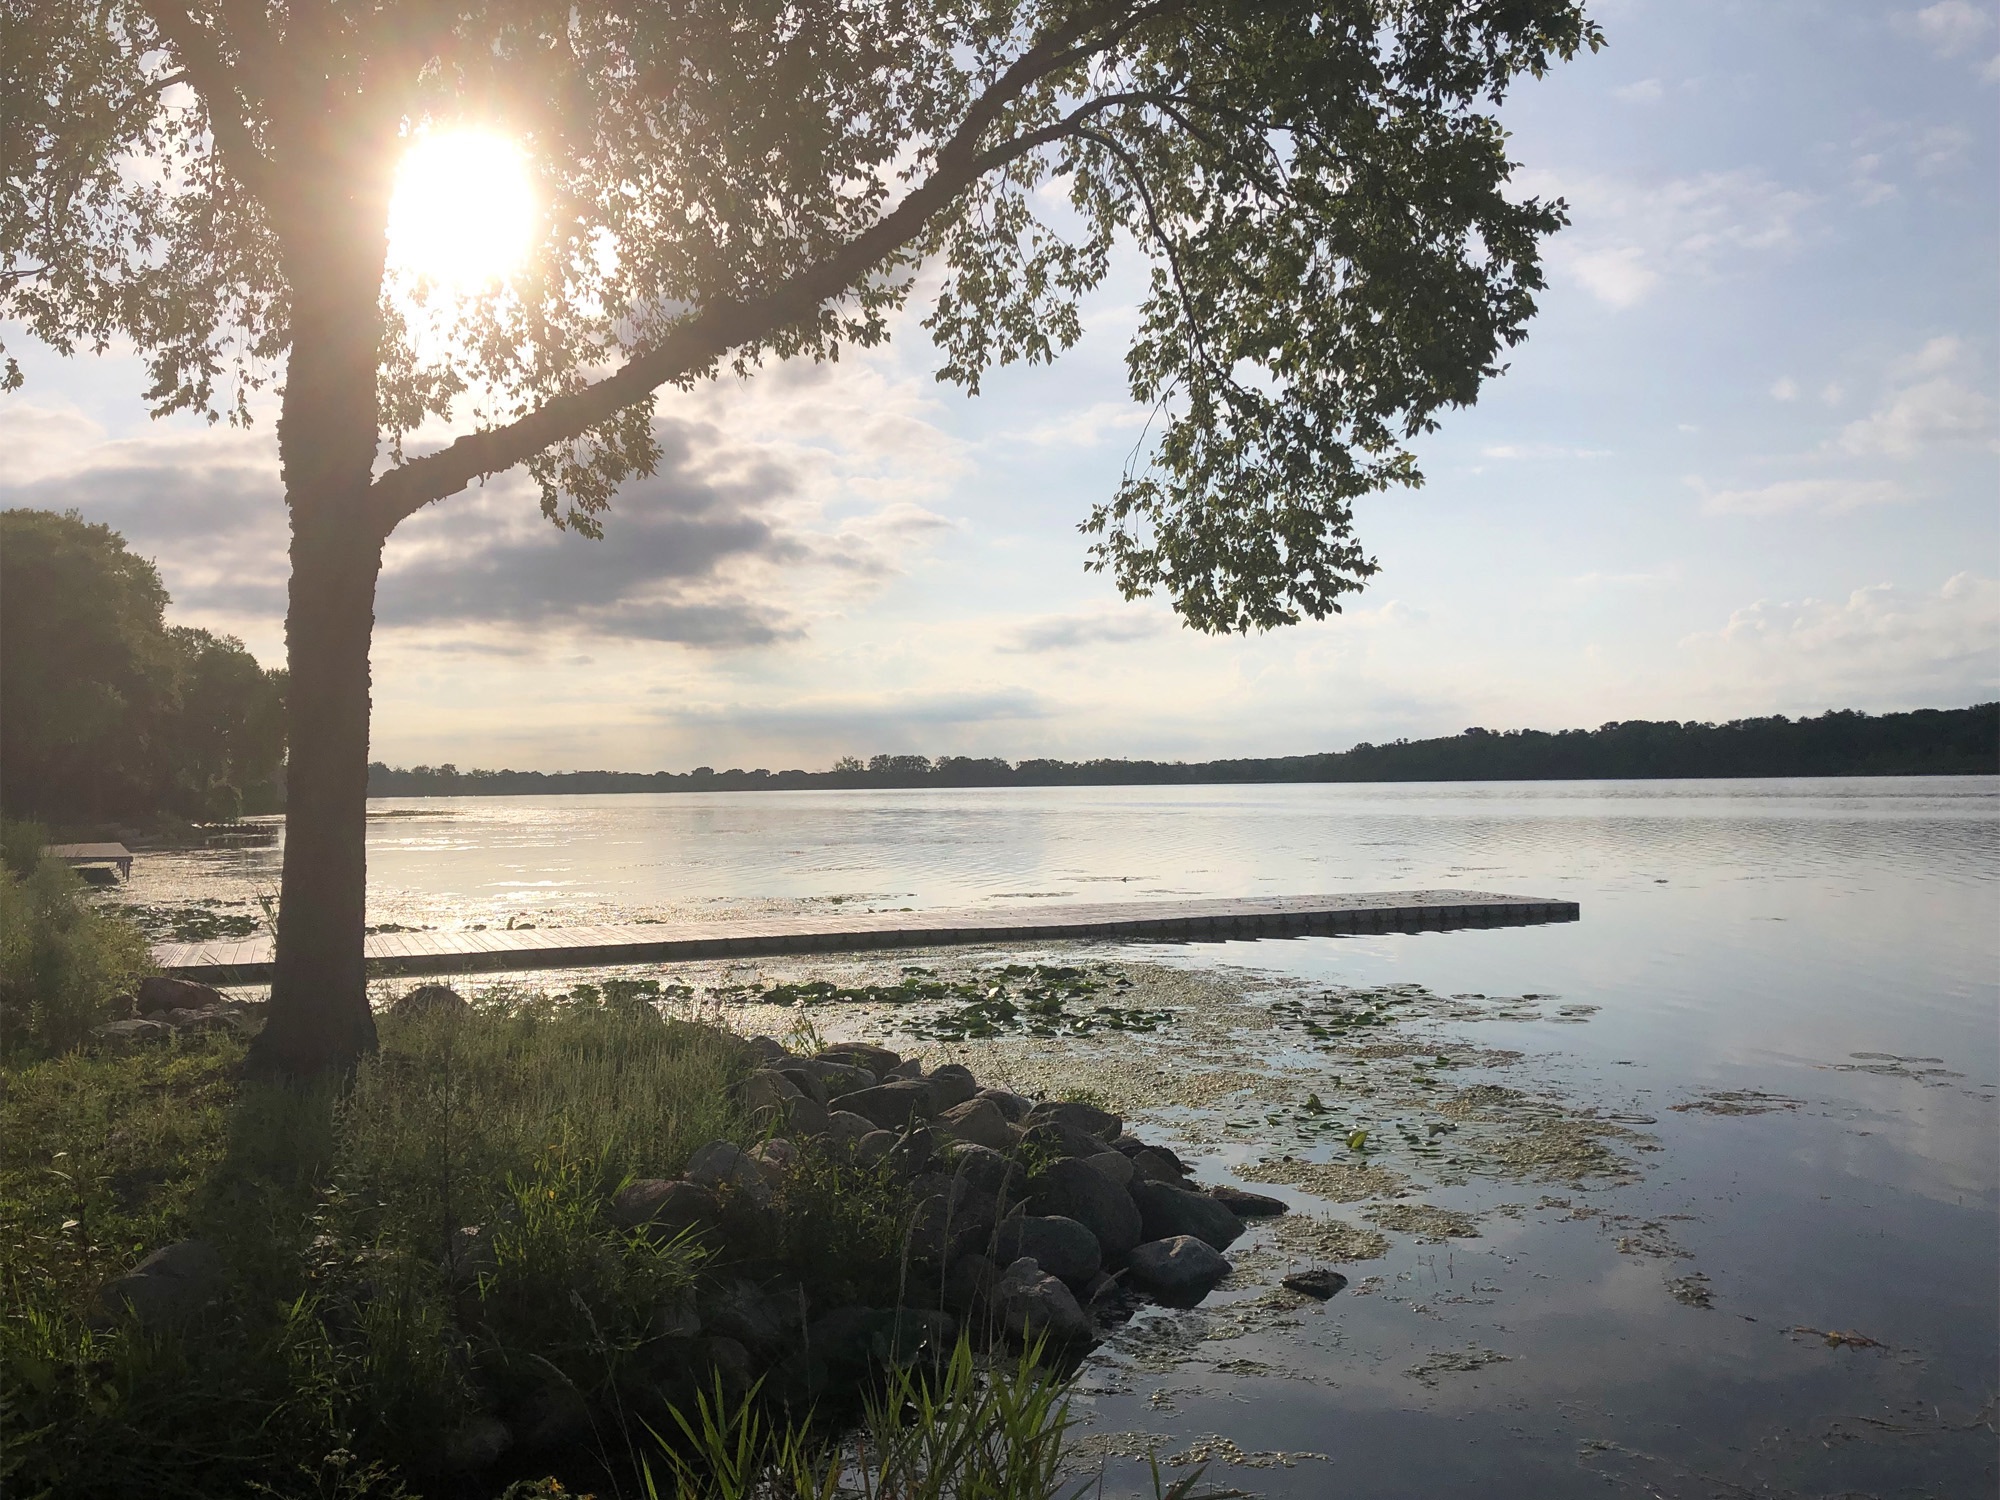 Lake Wingra on August 21, 2019.